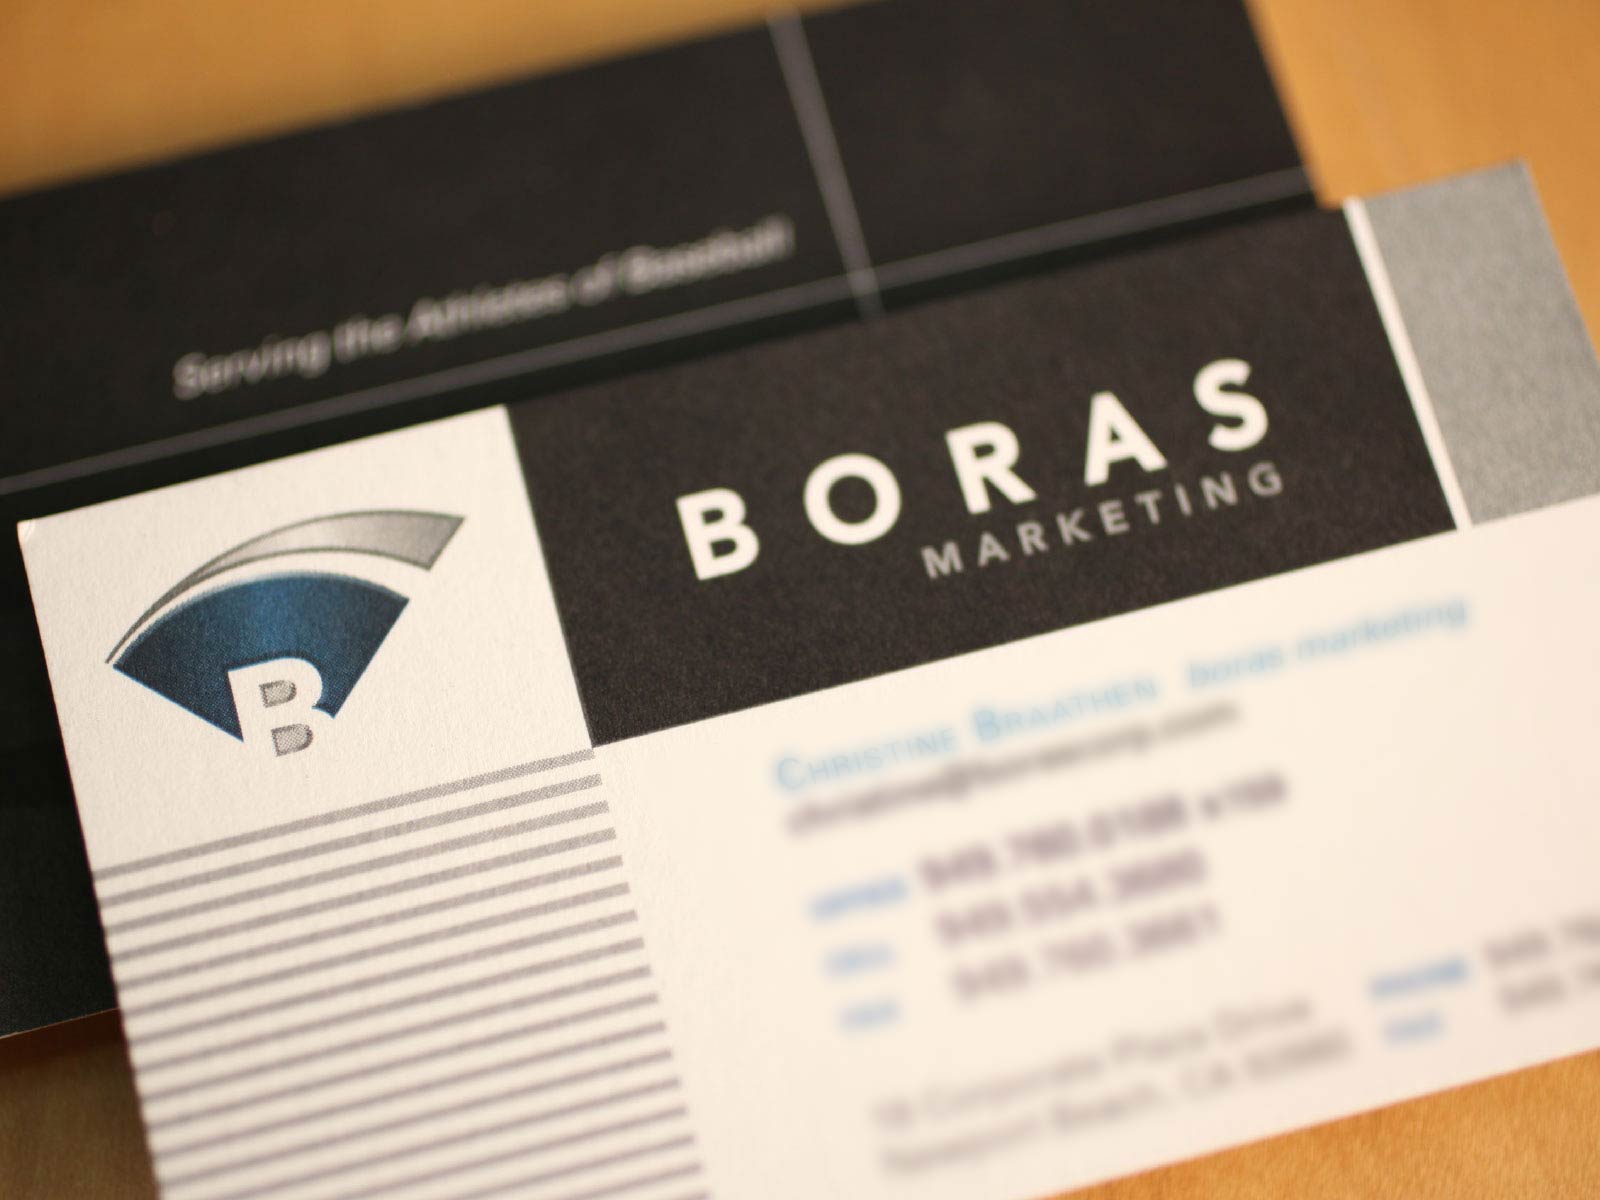 Boras Corporation Branding and Identity